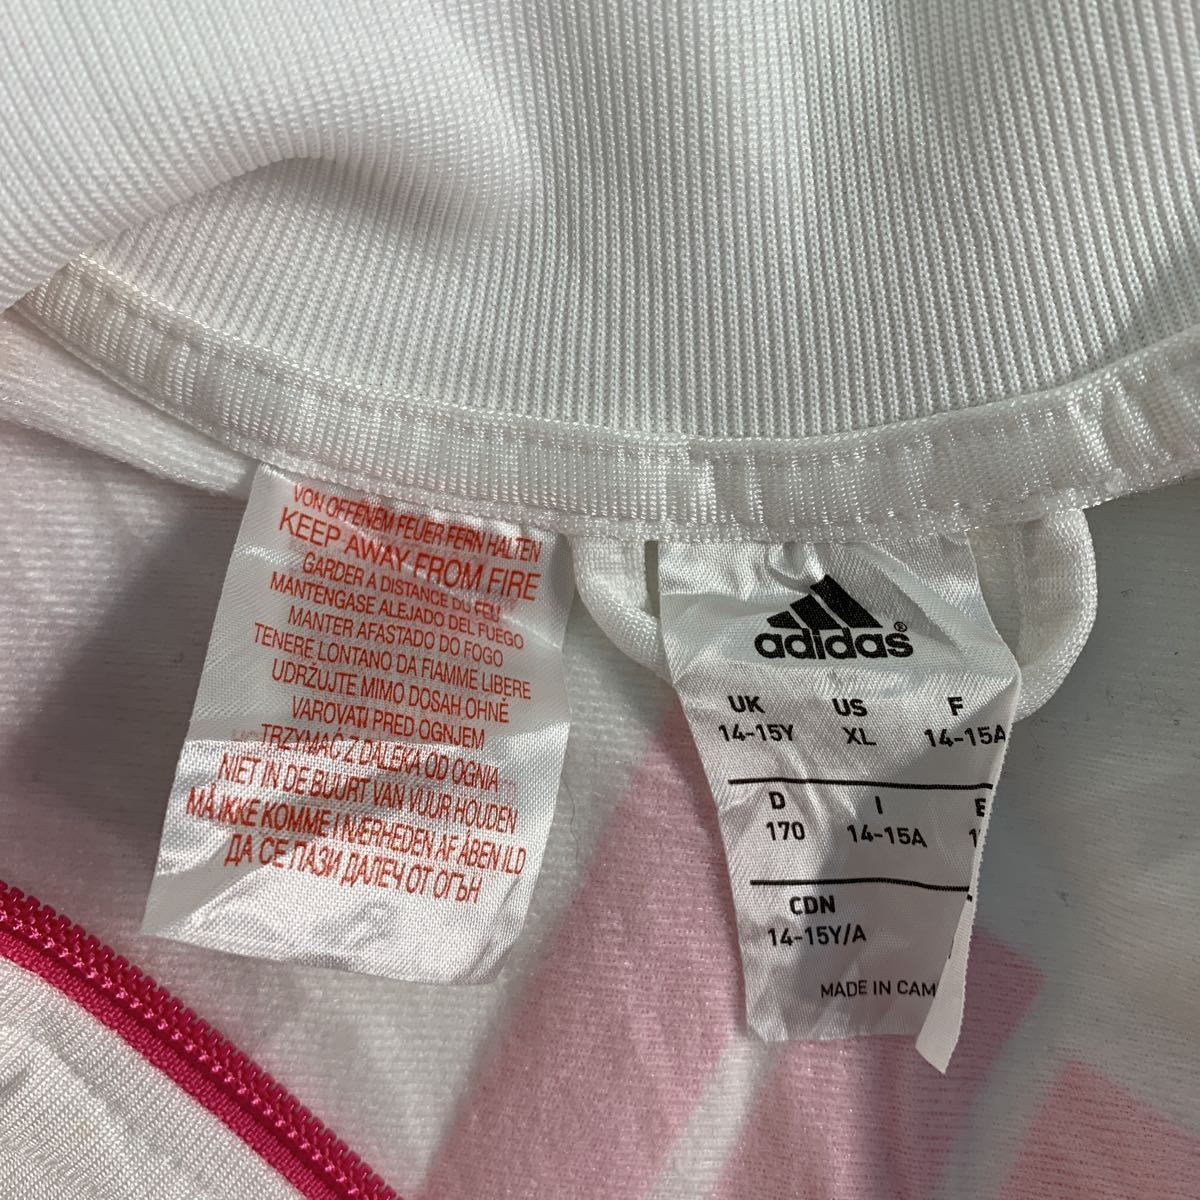 adidas jersey Kids 170 white pink Kids Adidas Zip up pocket Logo old clothes . America buying up a507-6387